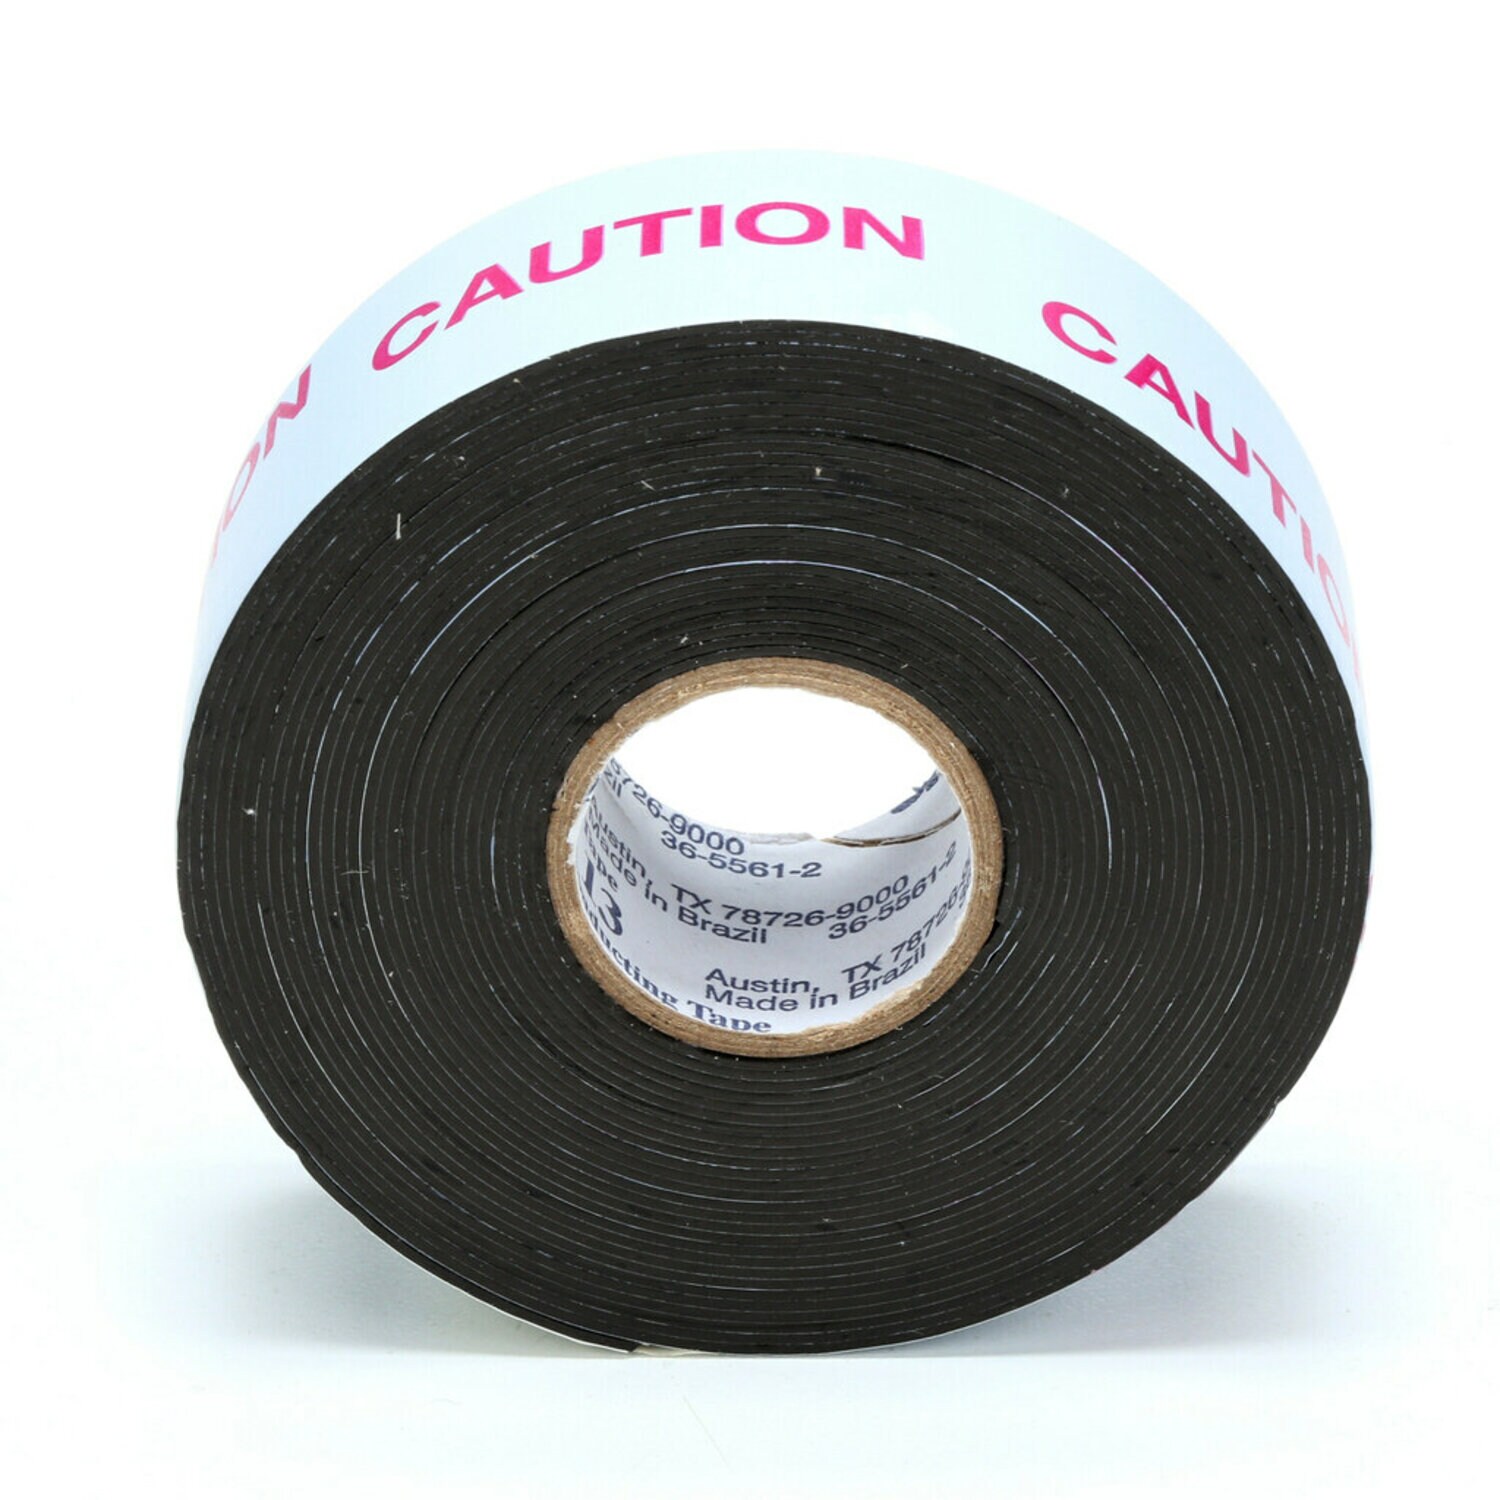 7100017214 - Scotch Electrical Semi-Conducting Tape 13, 1 in x 15 ft, Printed,
Black, 1 roll/carton, 112 rolls/Case